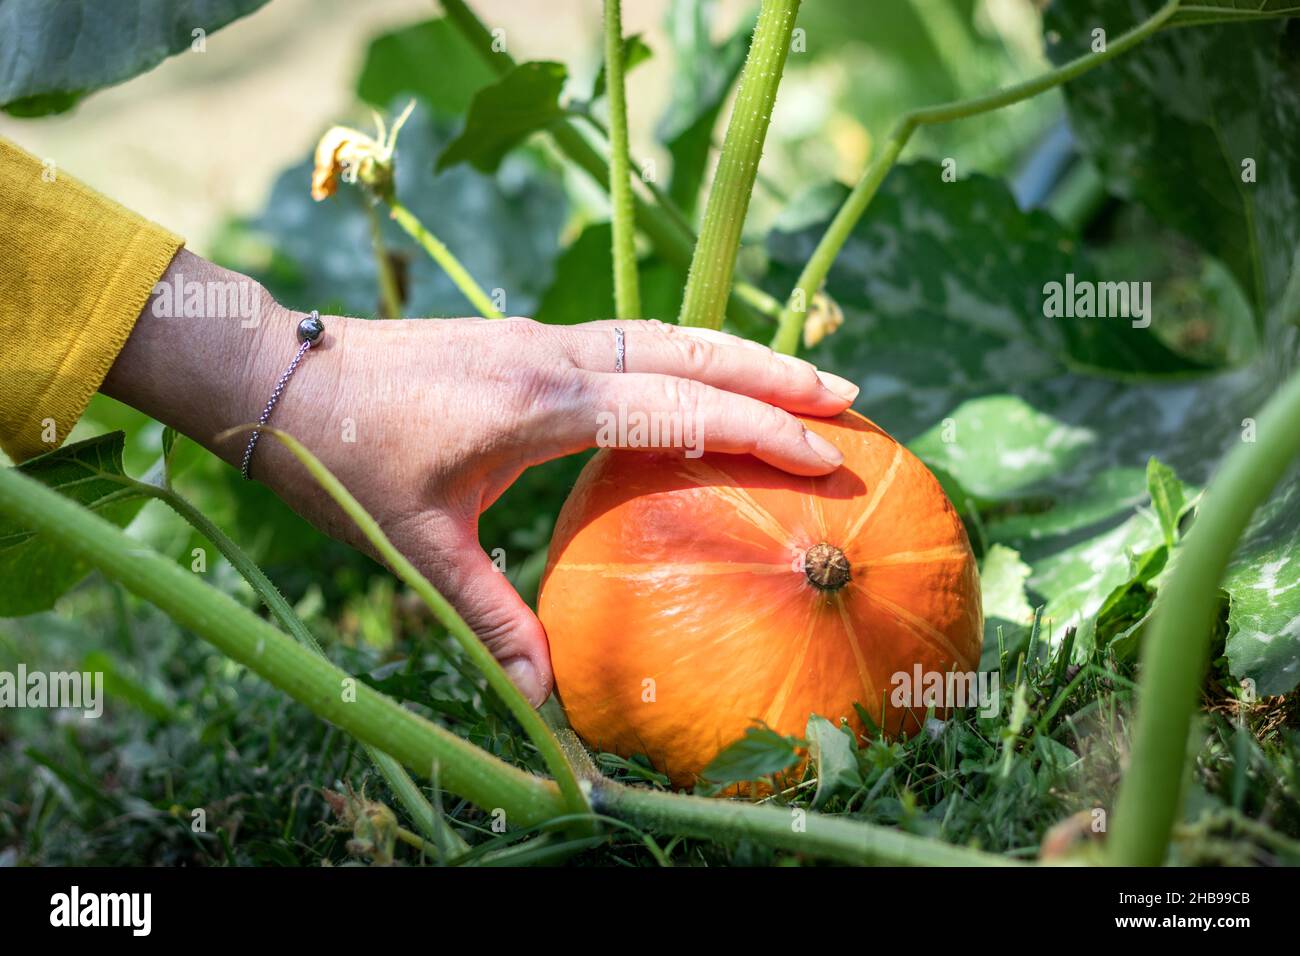 Harvest pumpkin hokkaido from organic vegetable garden. Farmer hand picking up ripe pumpkins at agricultural field Stock Photo